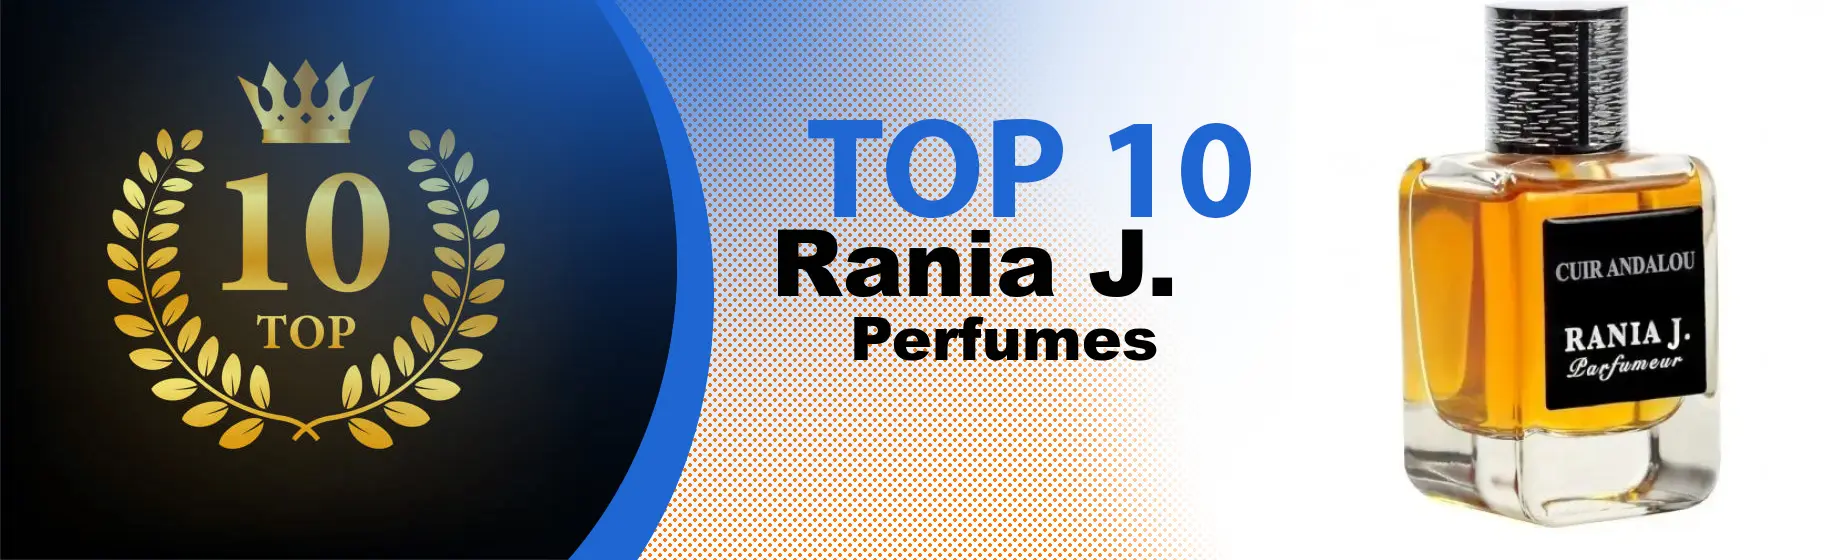 Top 10 Best Rania J. perfumes : Ultimate Buyer Guide